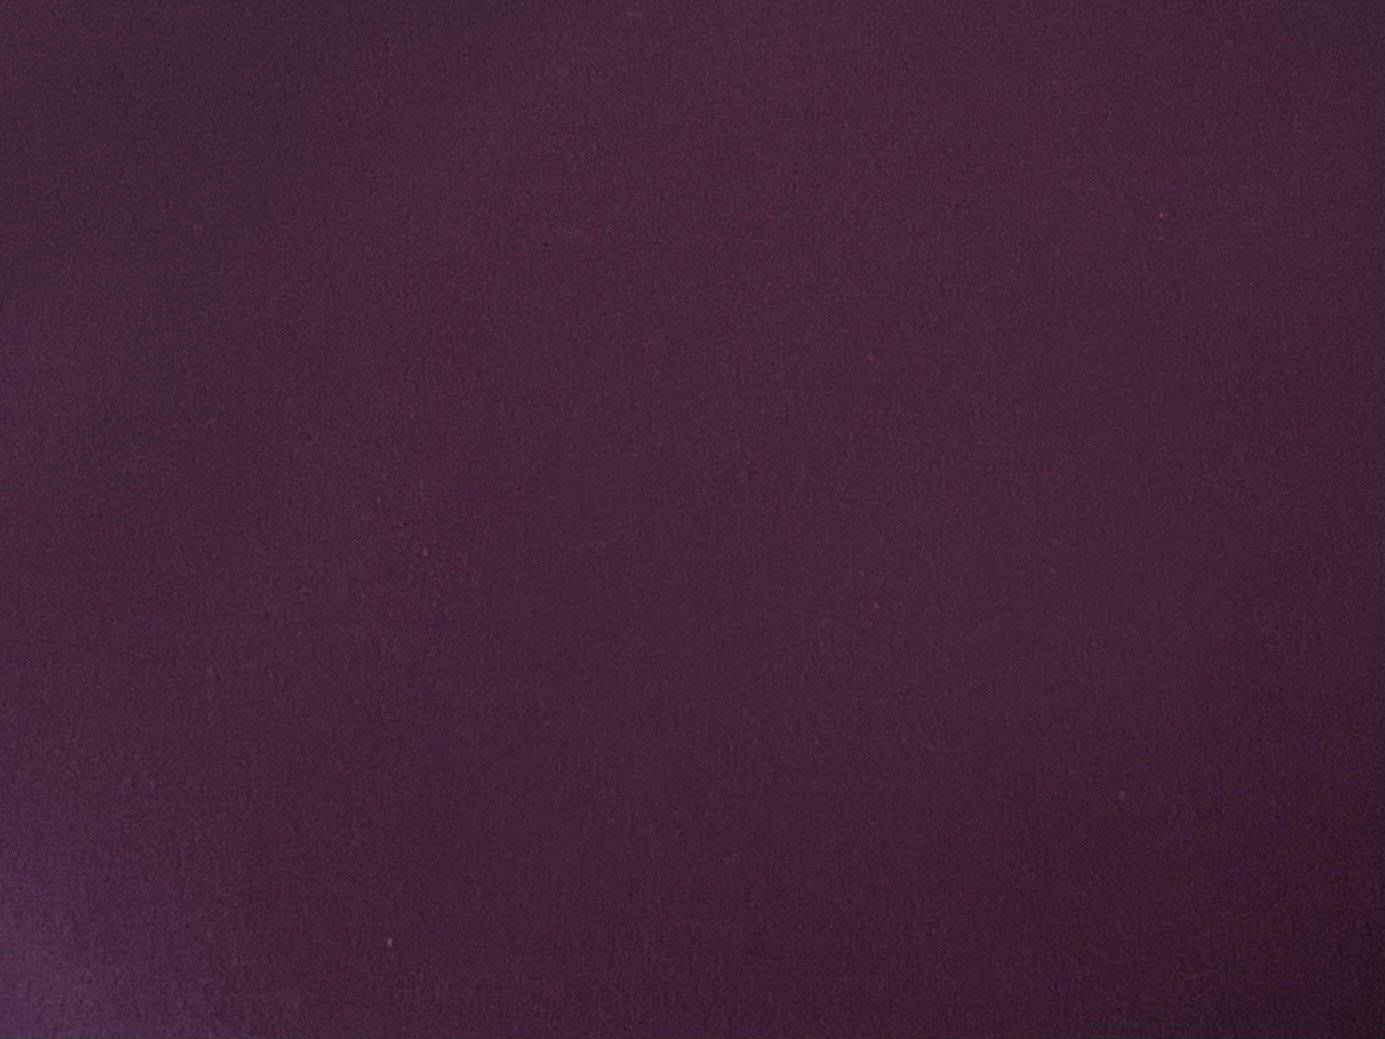 Double Sided Eggplant Purple Newborn Photography Posing Fabric Backdrop - Beautiful Photo Props